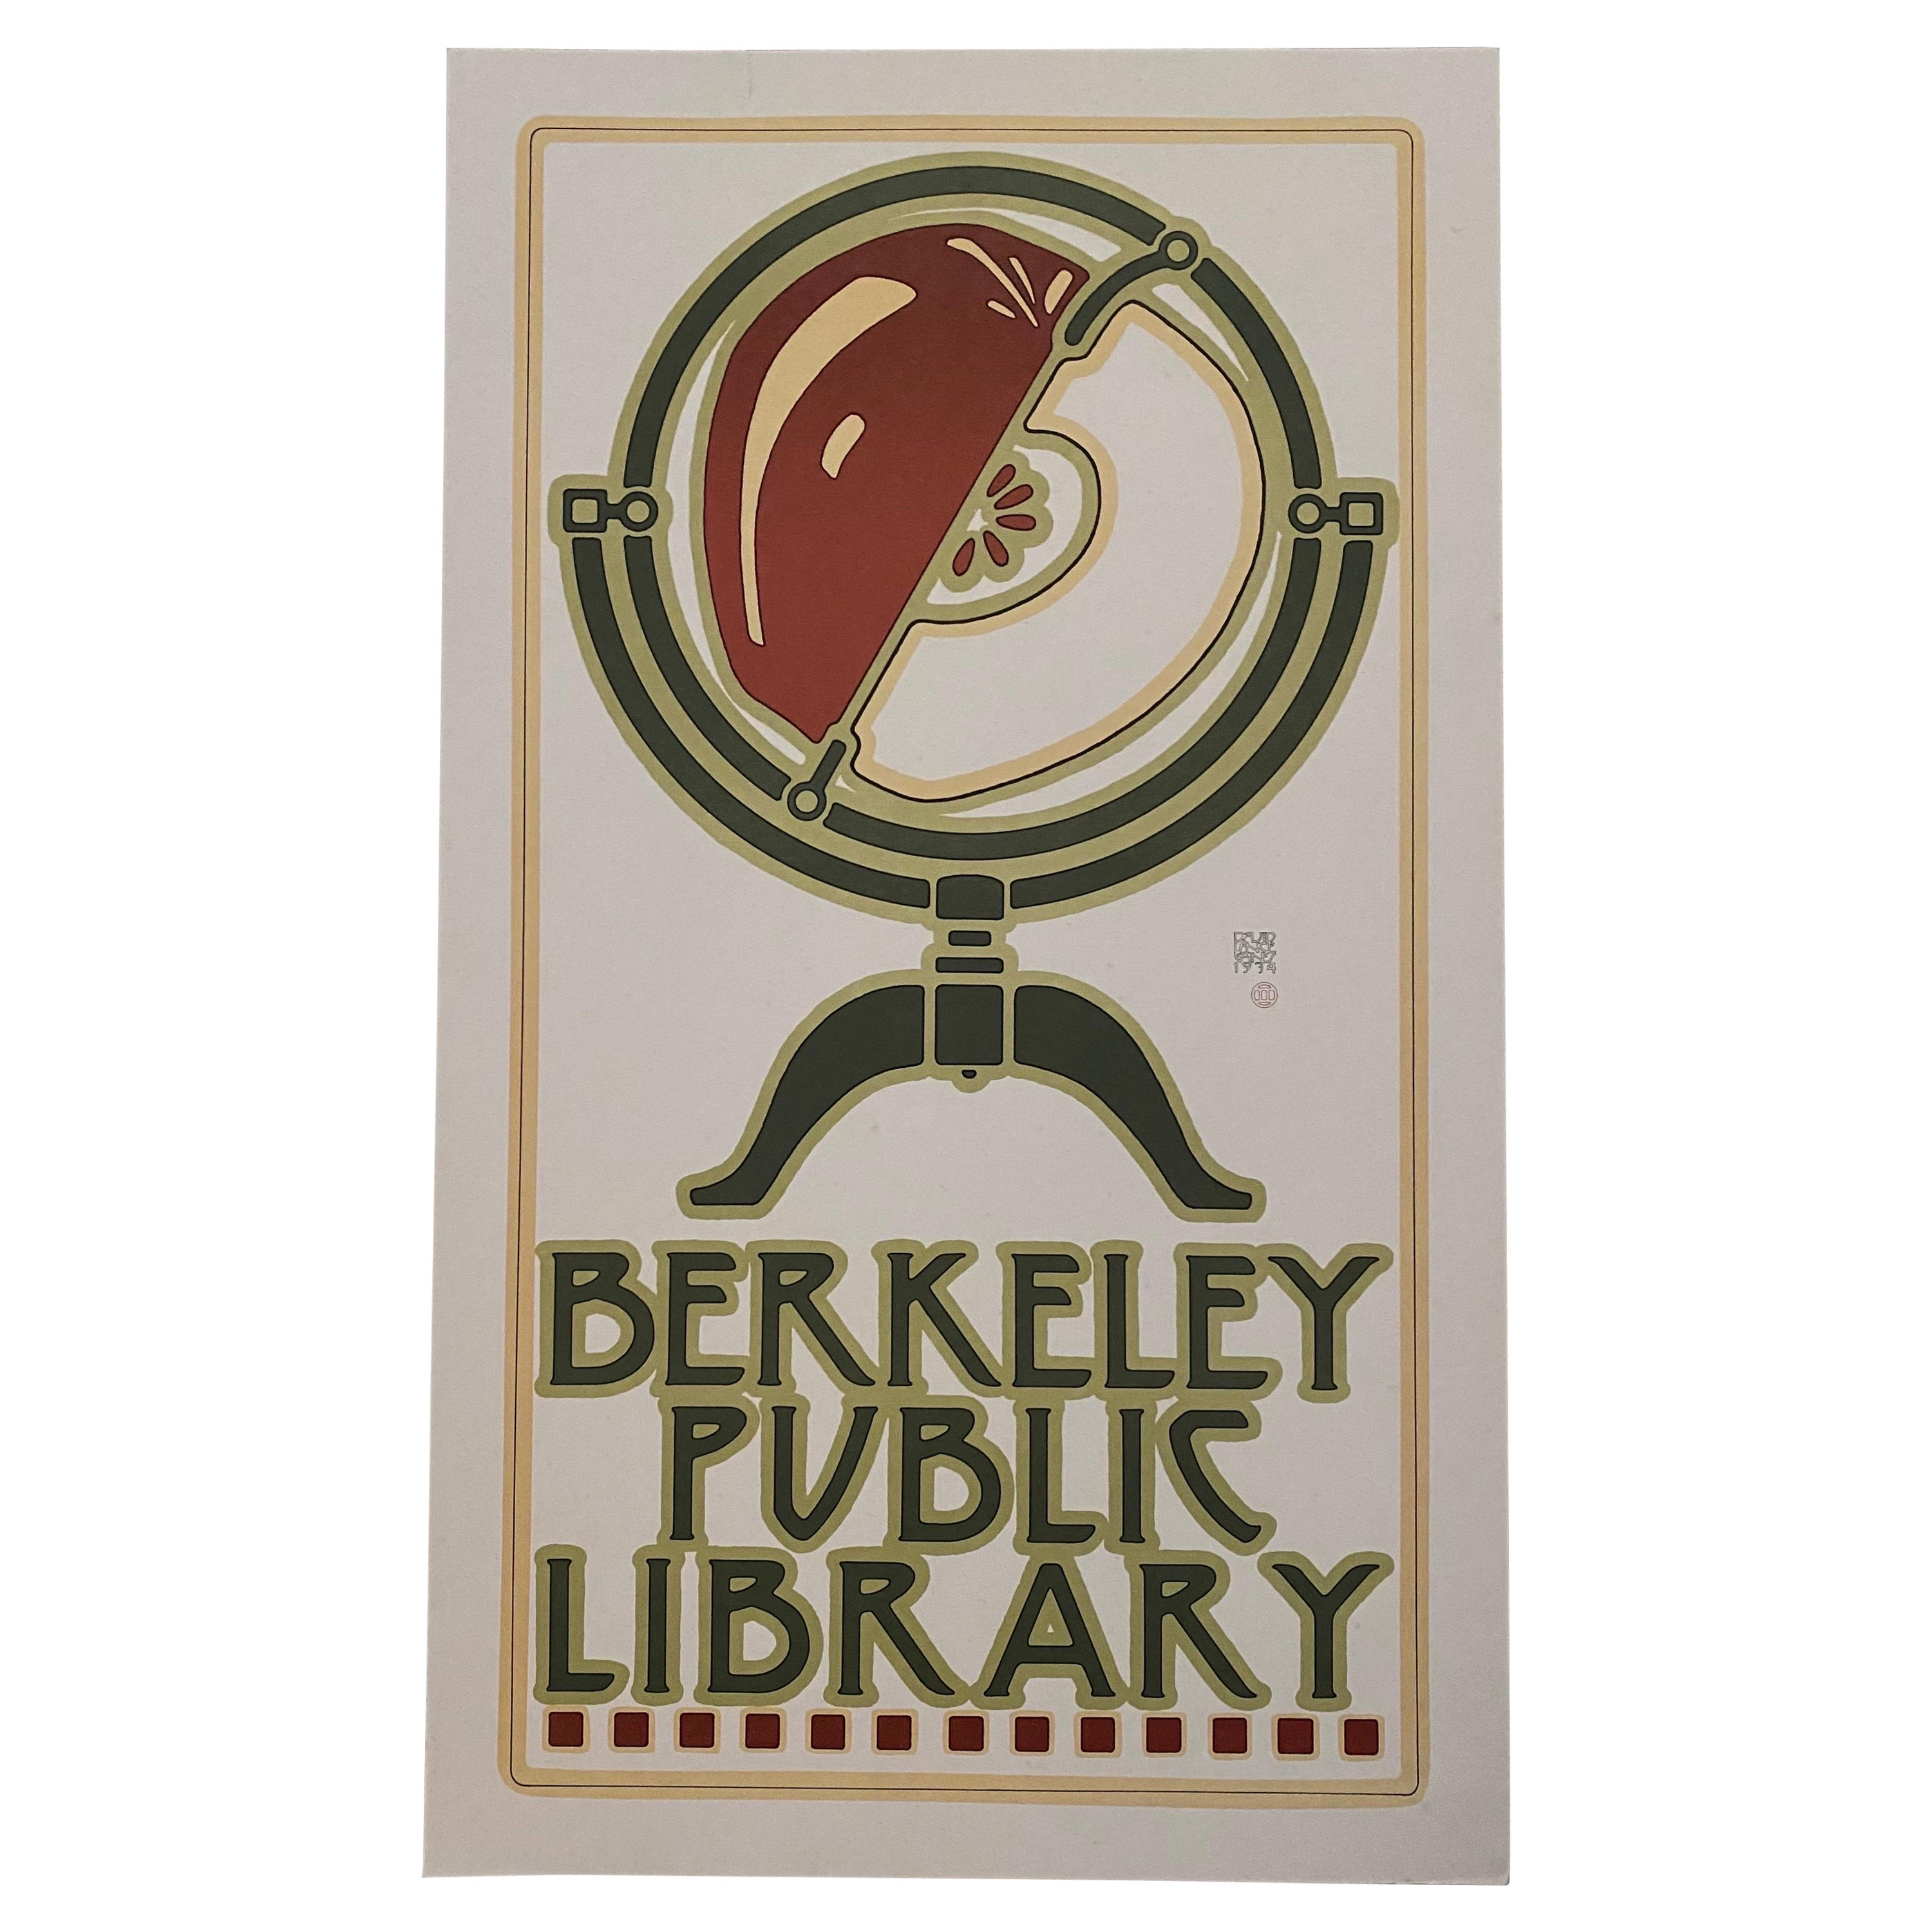 1977 David Lance Goines "Berkeley Public Library" Lithograph For Sale